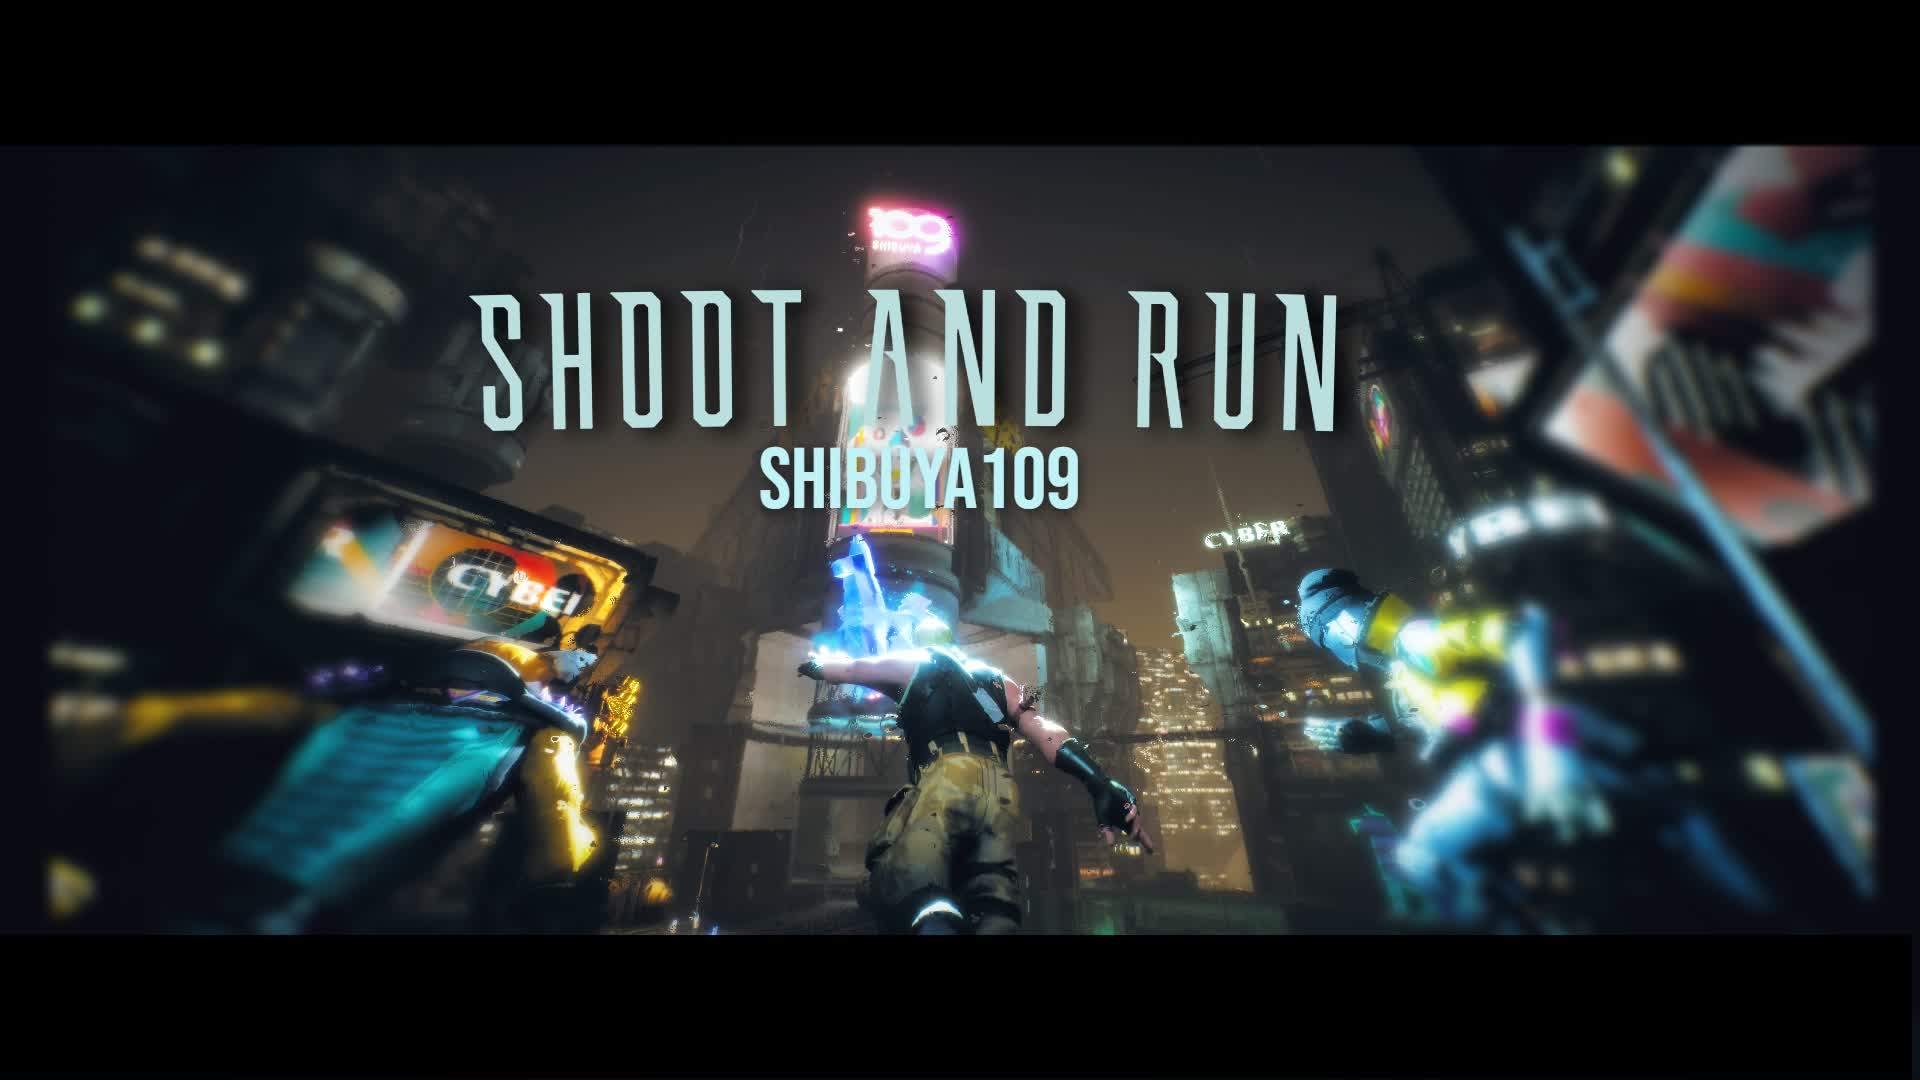 SHIBUYA109 SHOOT and RUN